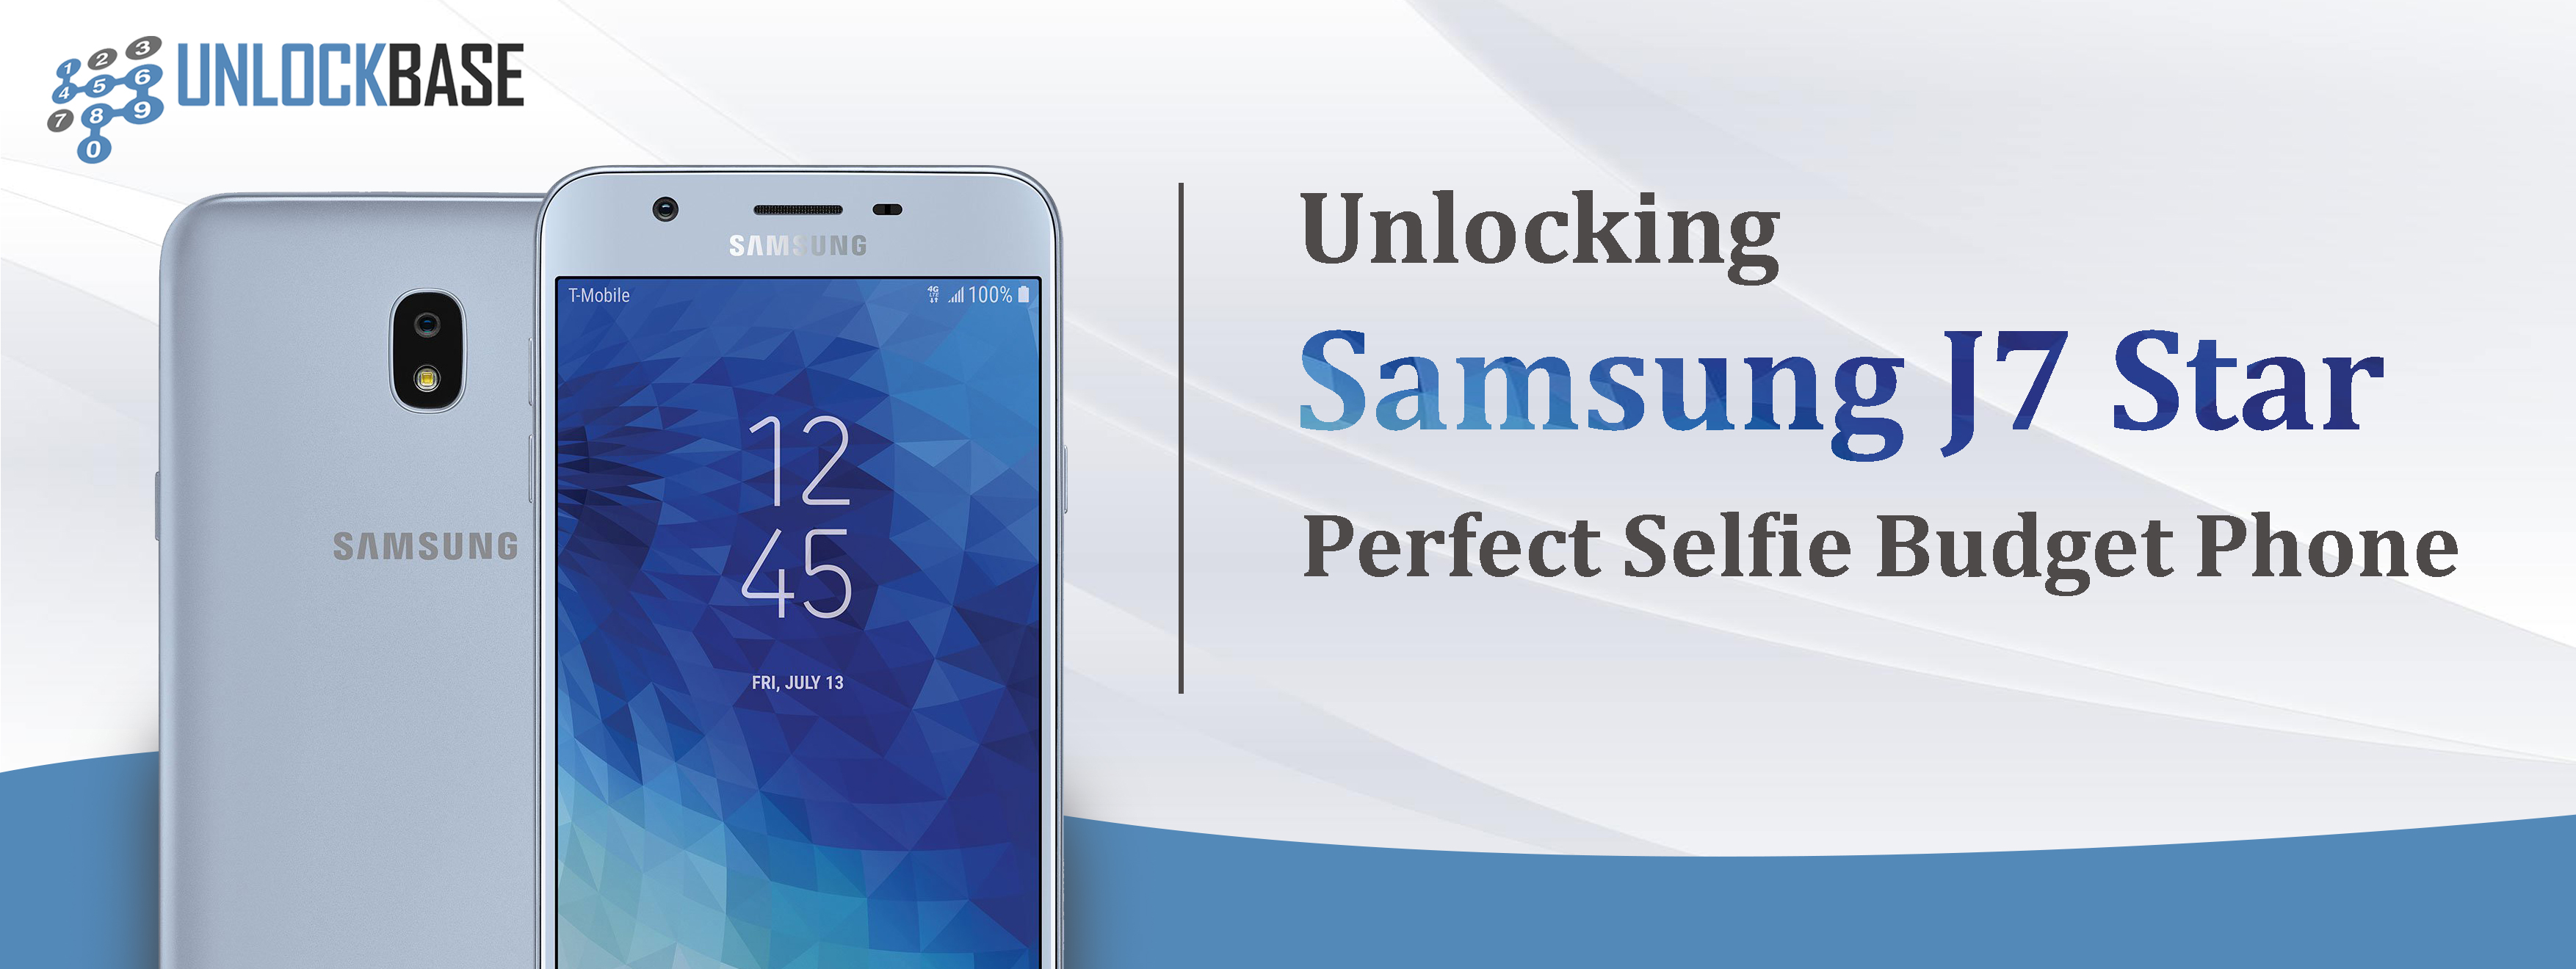 Unlocking Samsung J7 Star Perfect Selfie Budget Phone Unlockbase